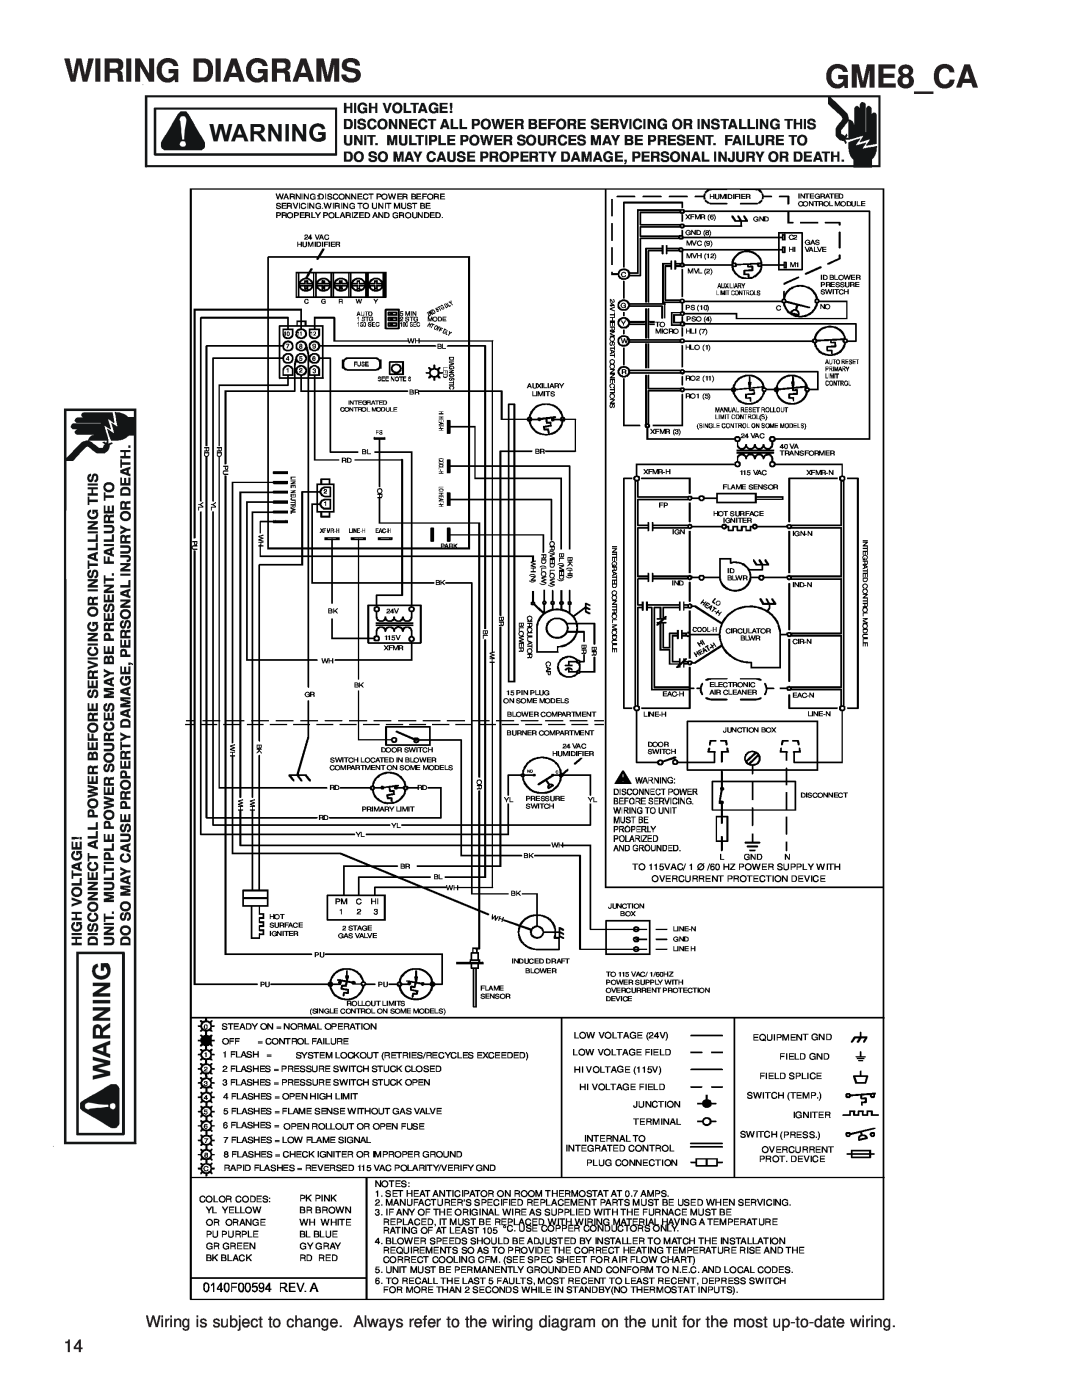 Goodman Mfg service manual Wiring Diagrams, GME8 CA 